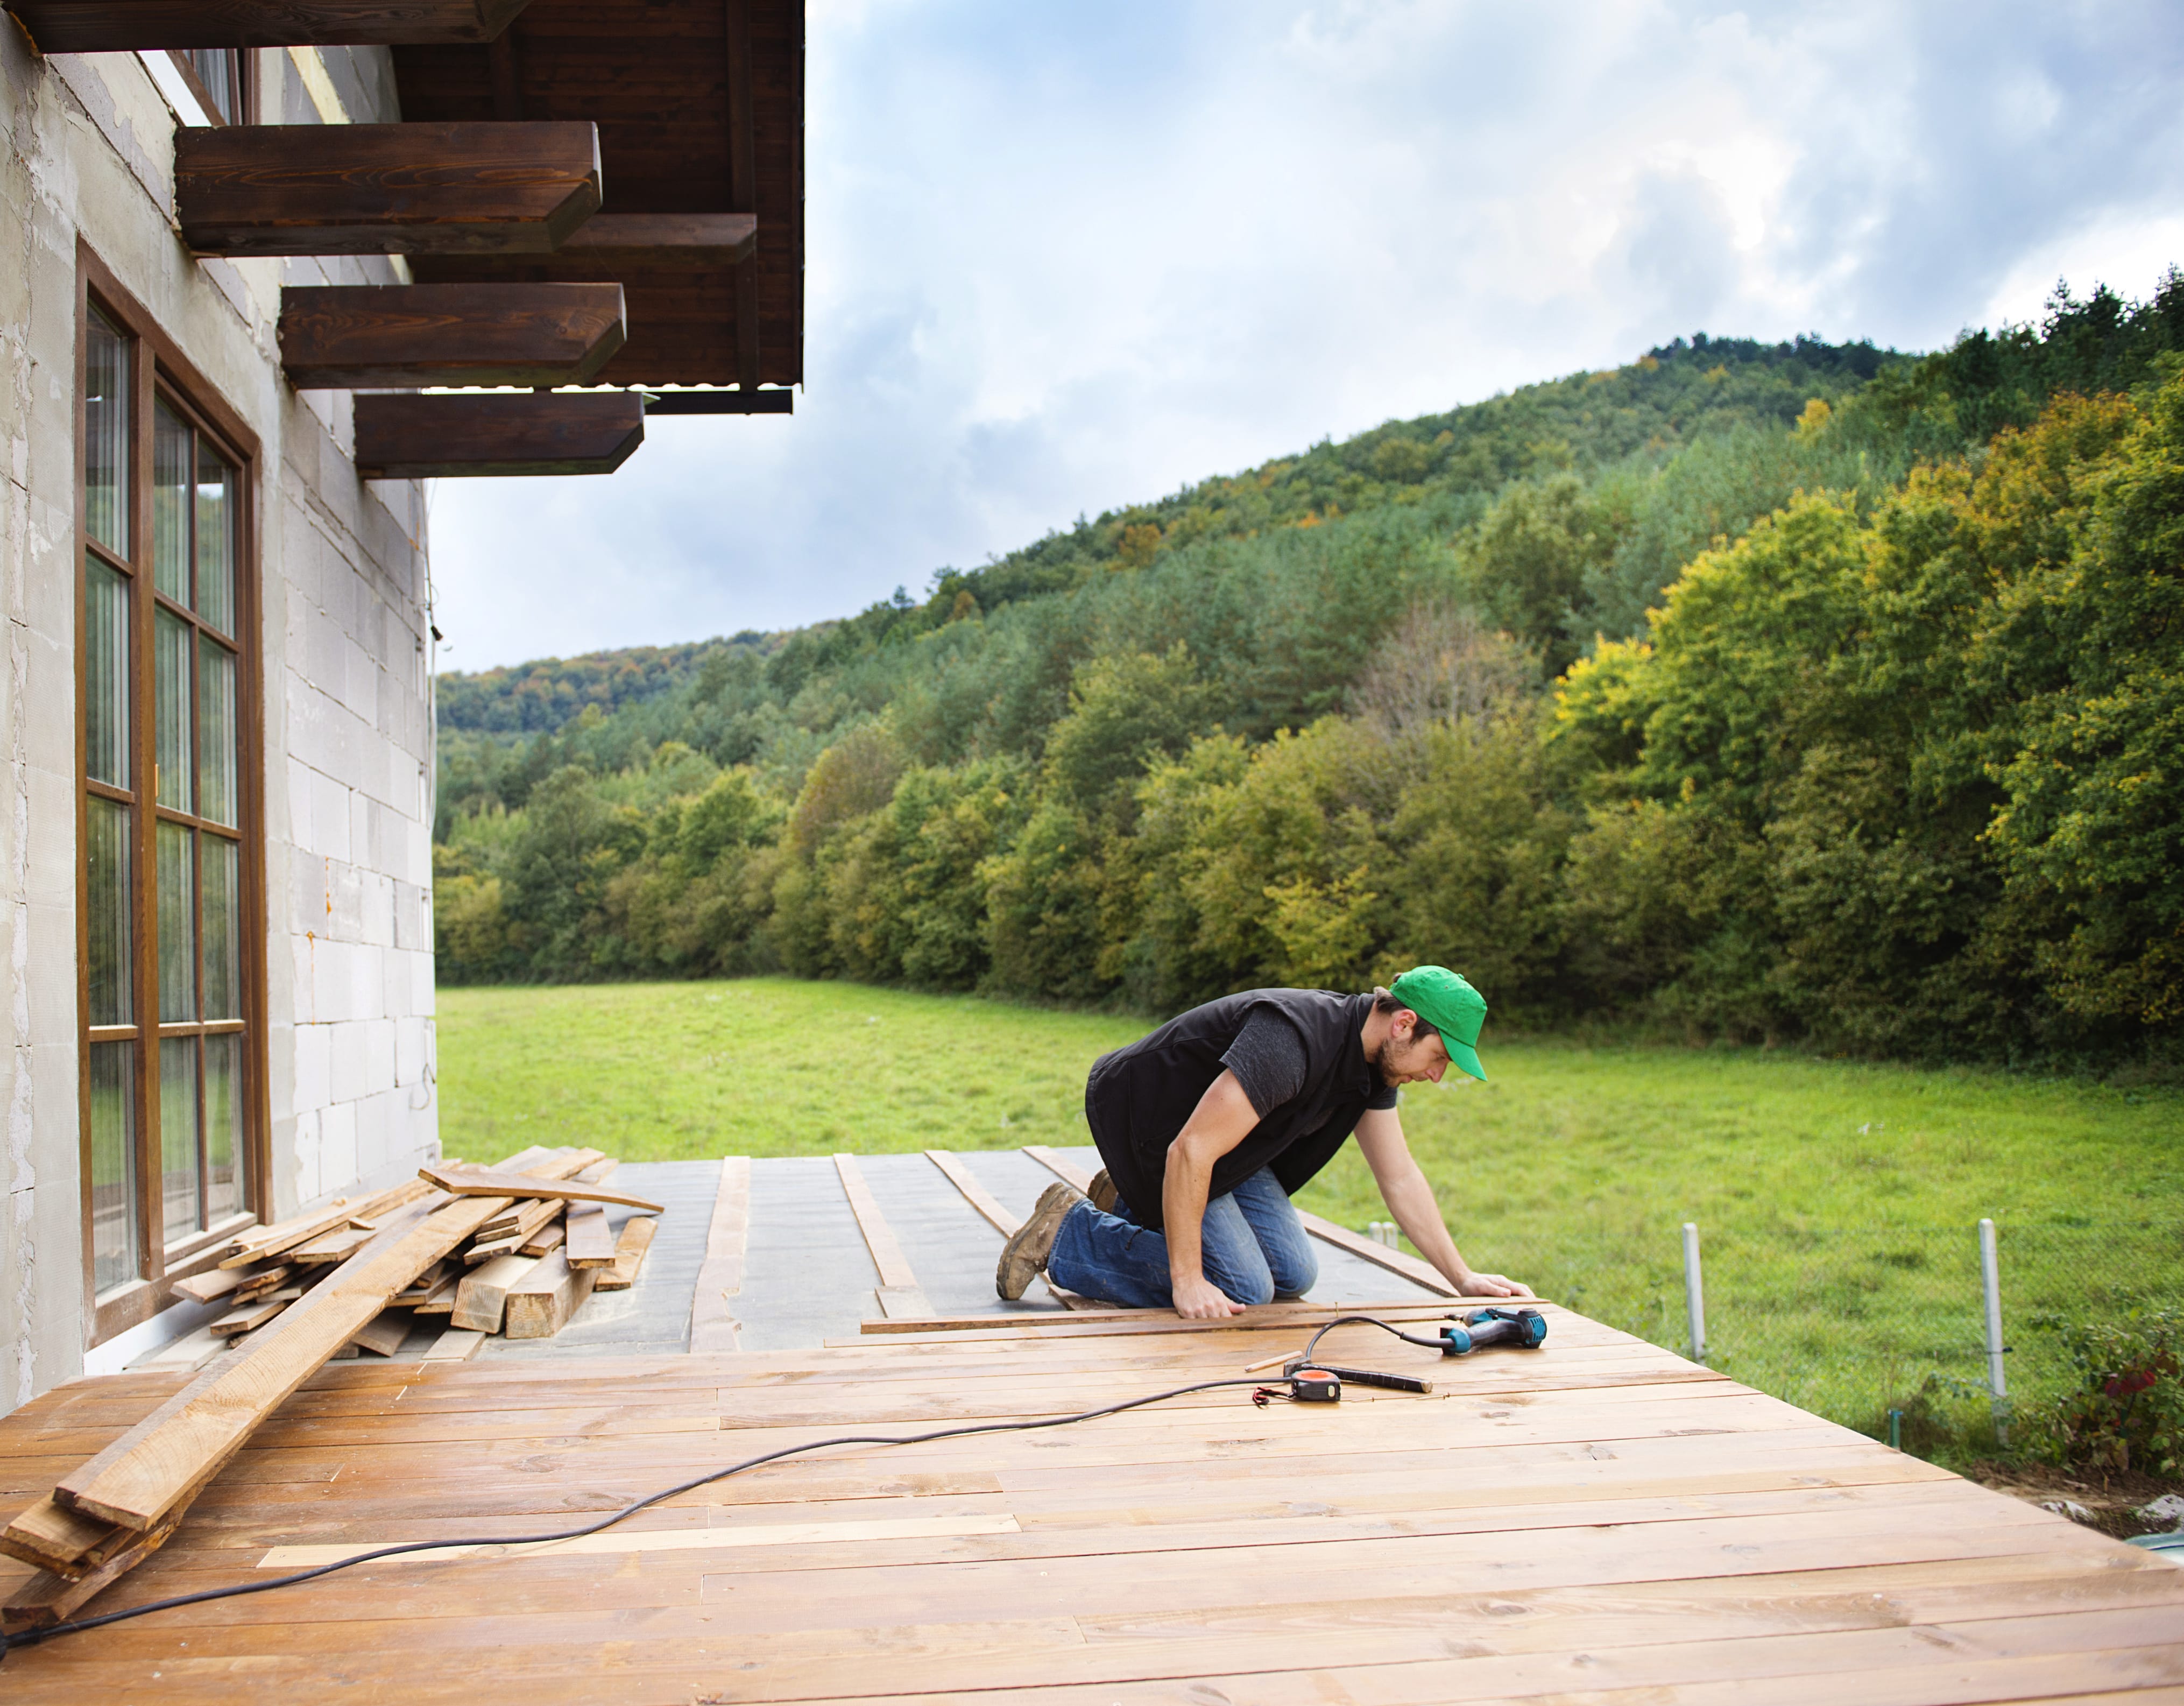 Un artisan en pleine installation d'une terrasse en bois